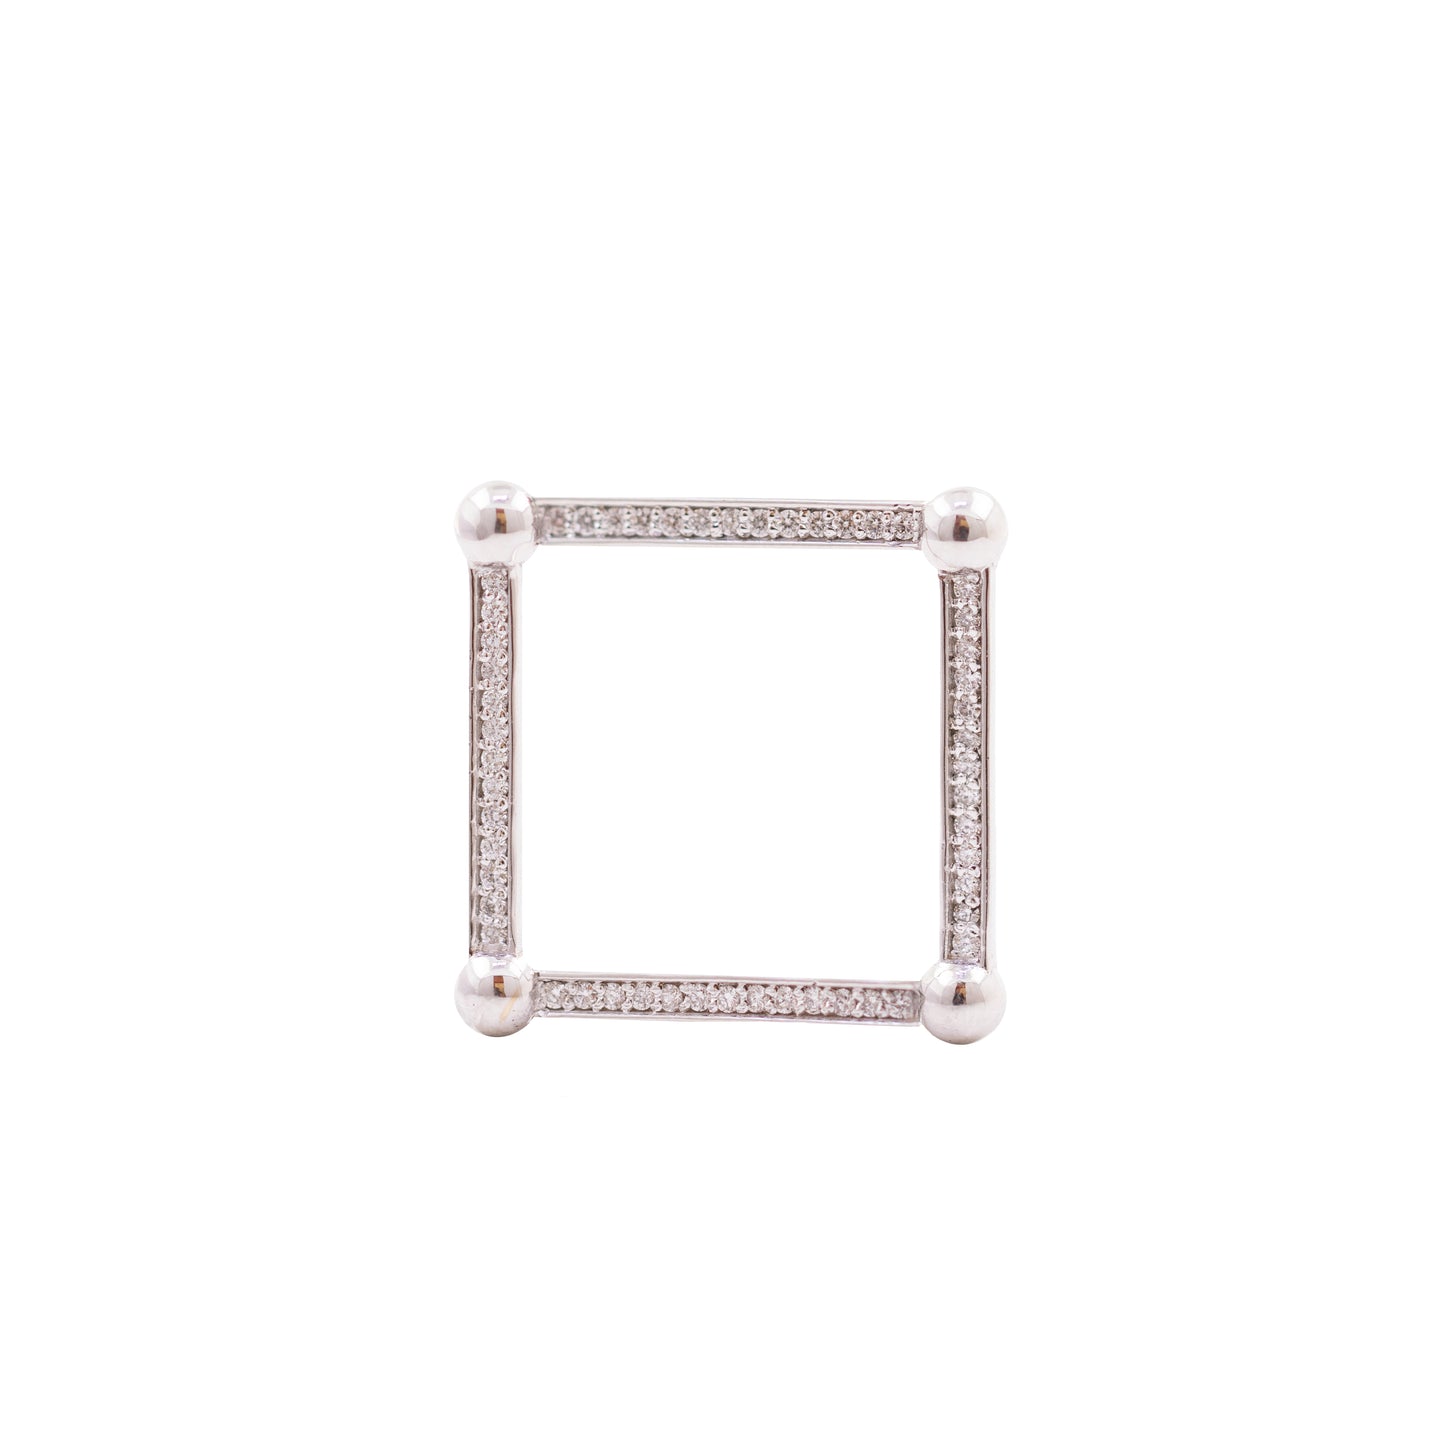 White Gold Square Ring with Diamonds | Pre-order